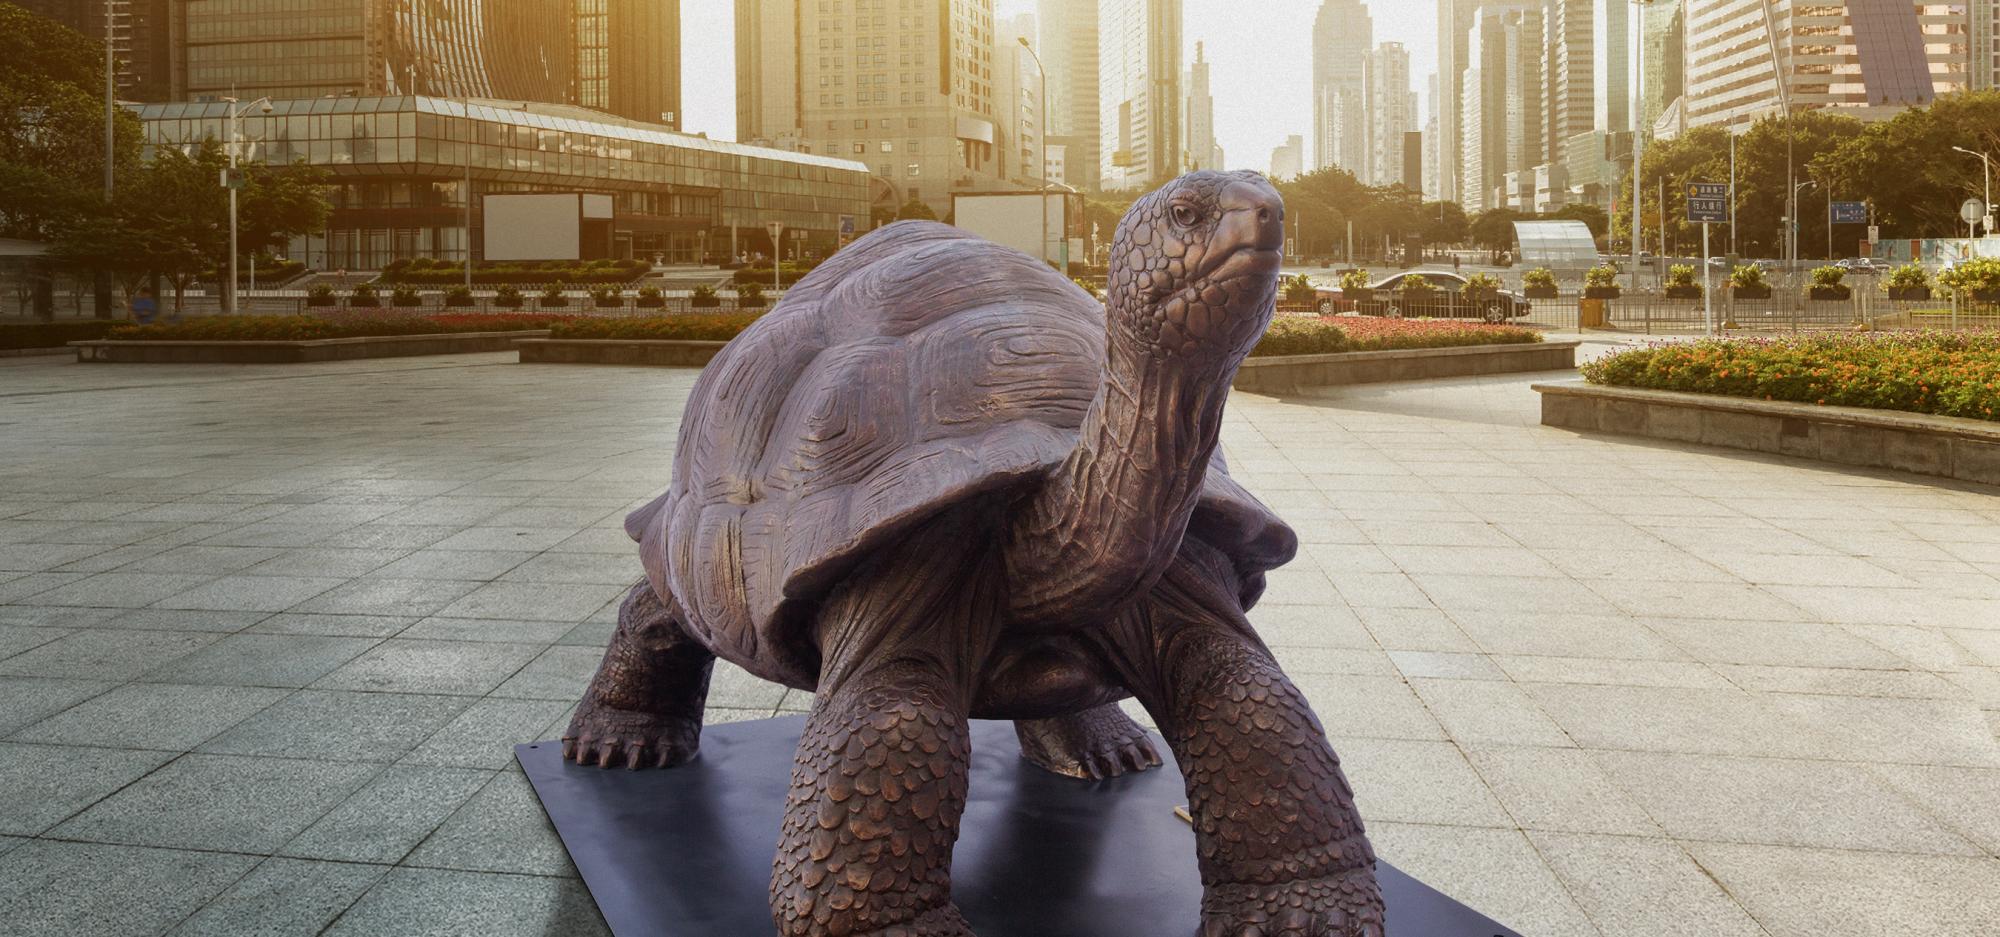 Wild Baby Giant Tortoise set against a city backdrop